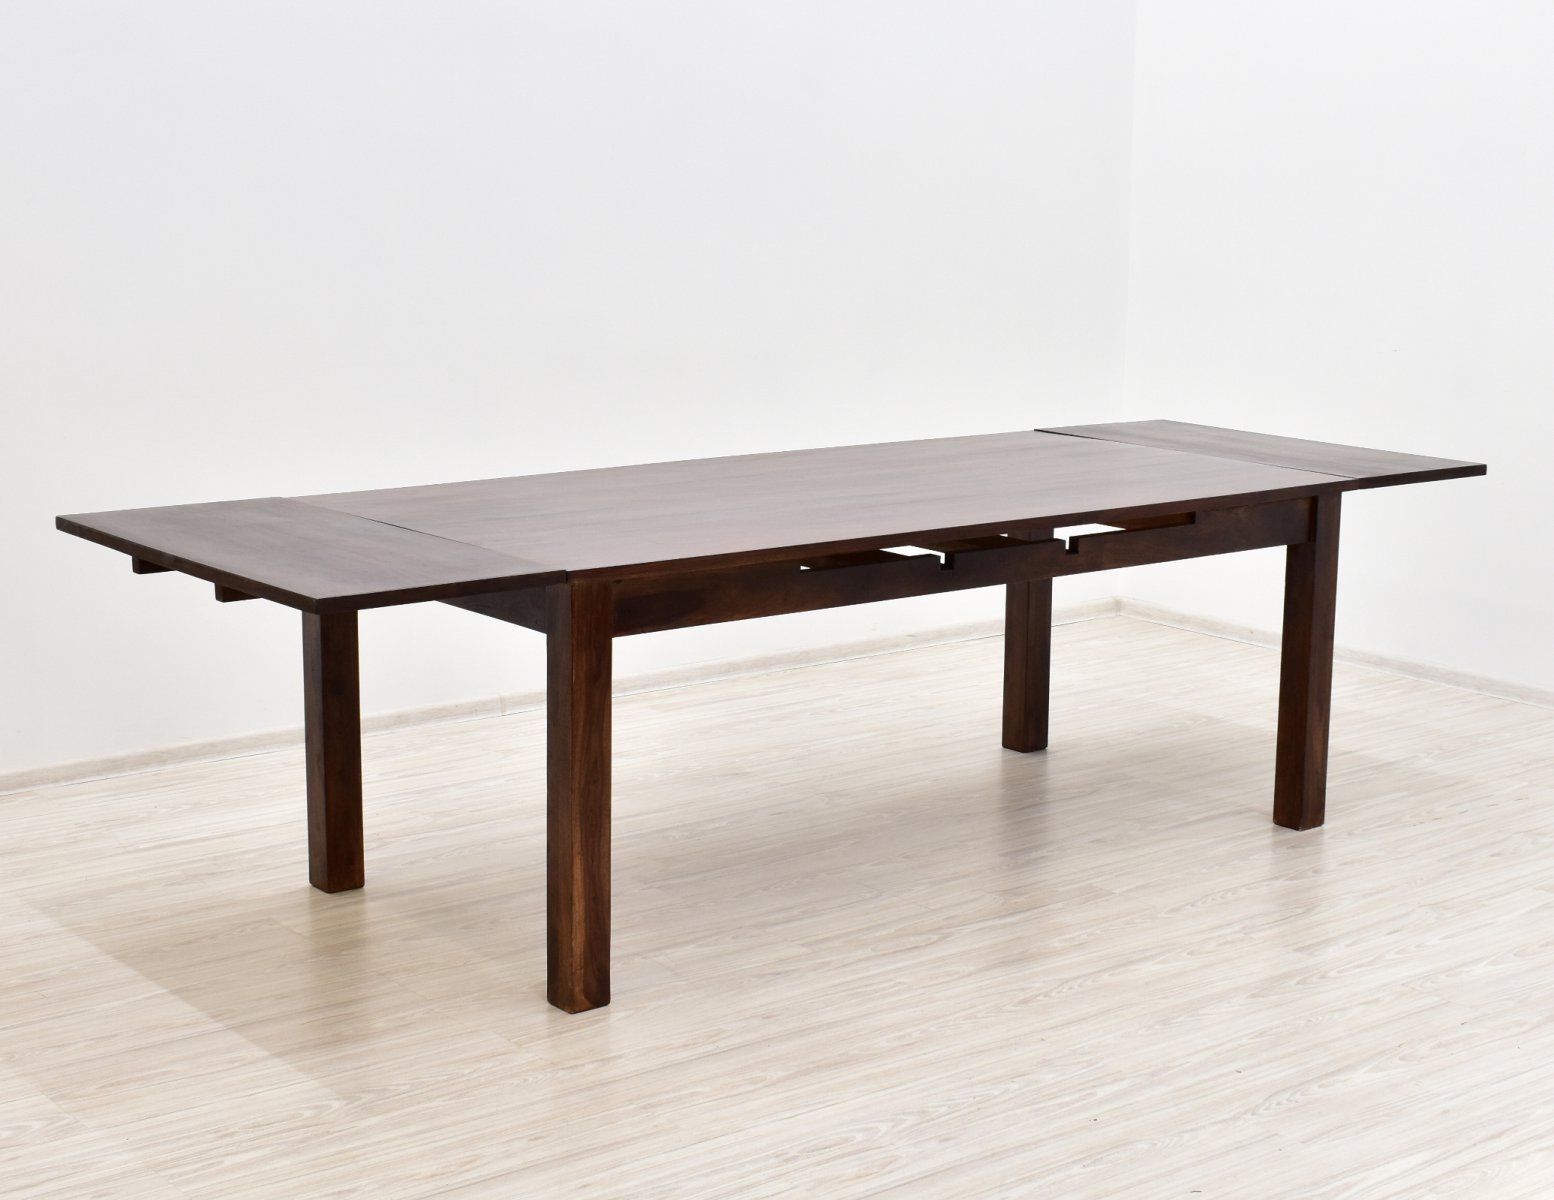 stol-kolonialny-lite-drewno-palisander-indyjski-rozkladany-ciemny-braz-masywny